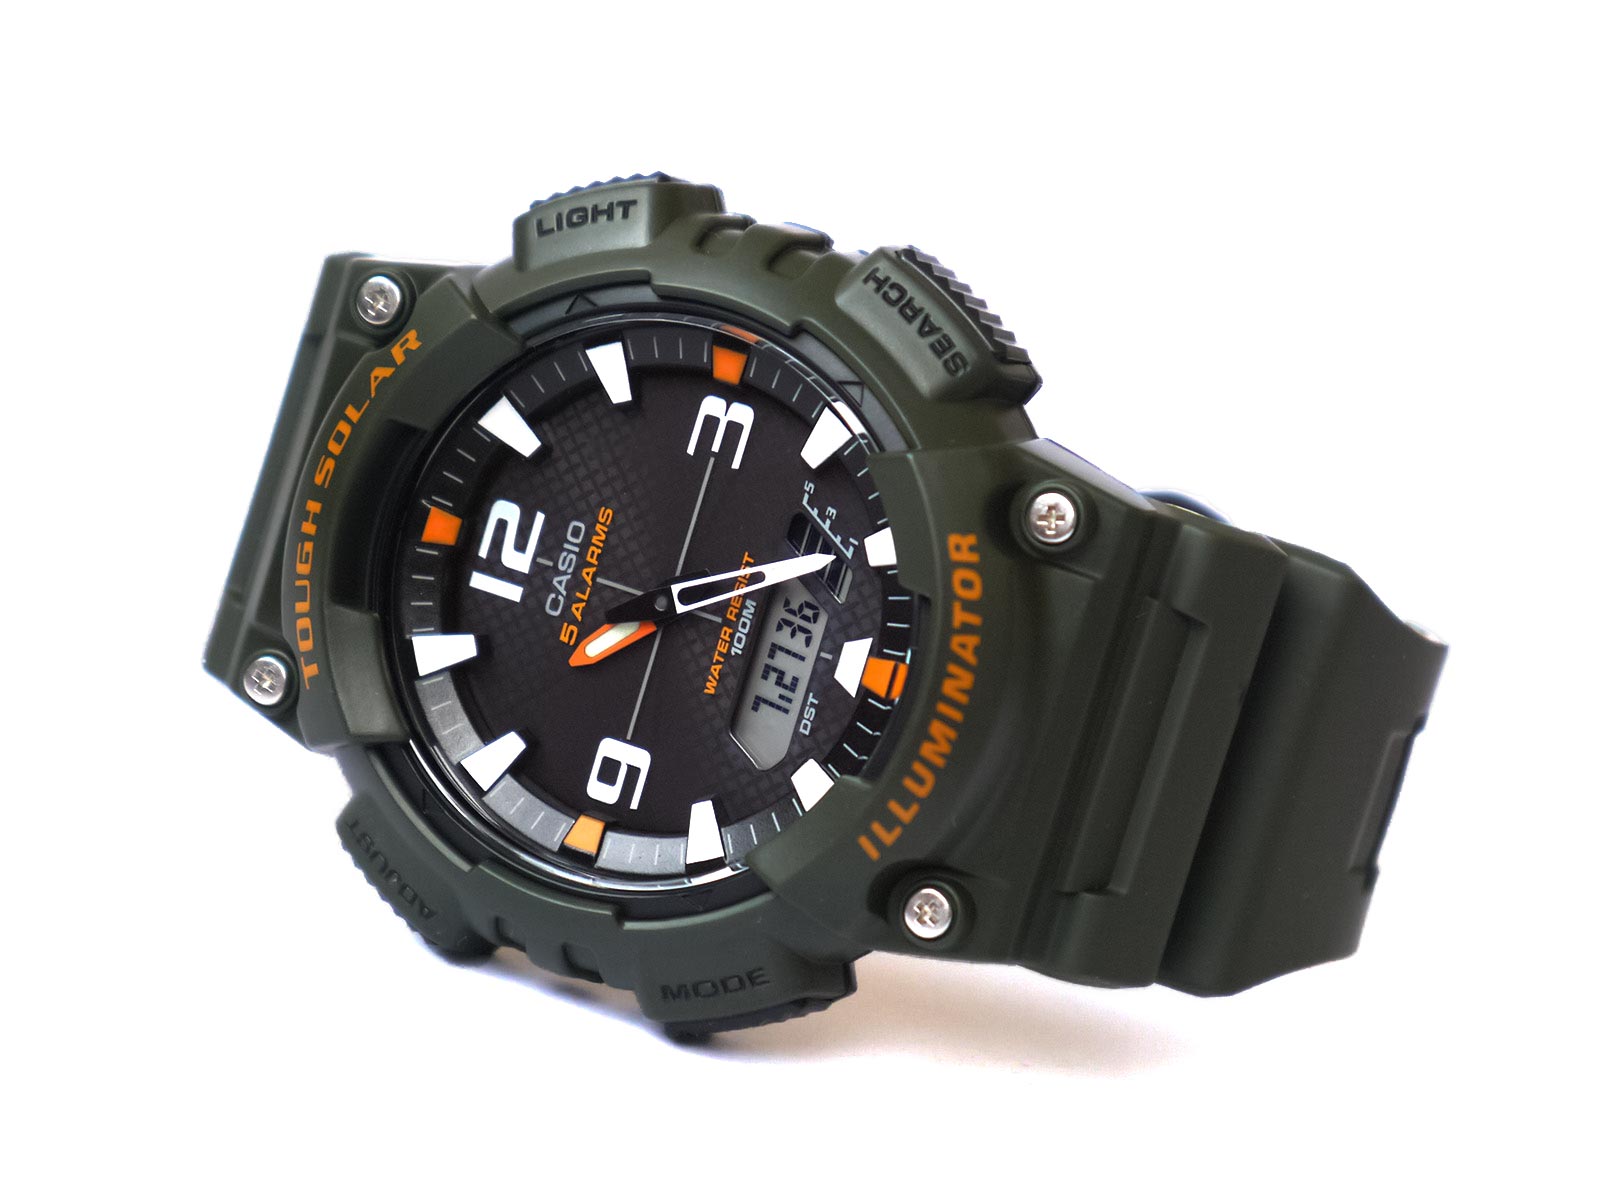 Casio AQ-S810W-3AV Solar Powered Watch ⋆ Watch High Green Quality Gallery Digi-Analog